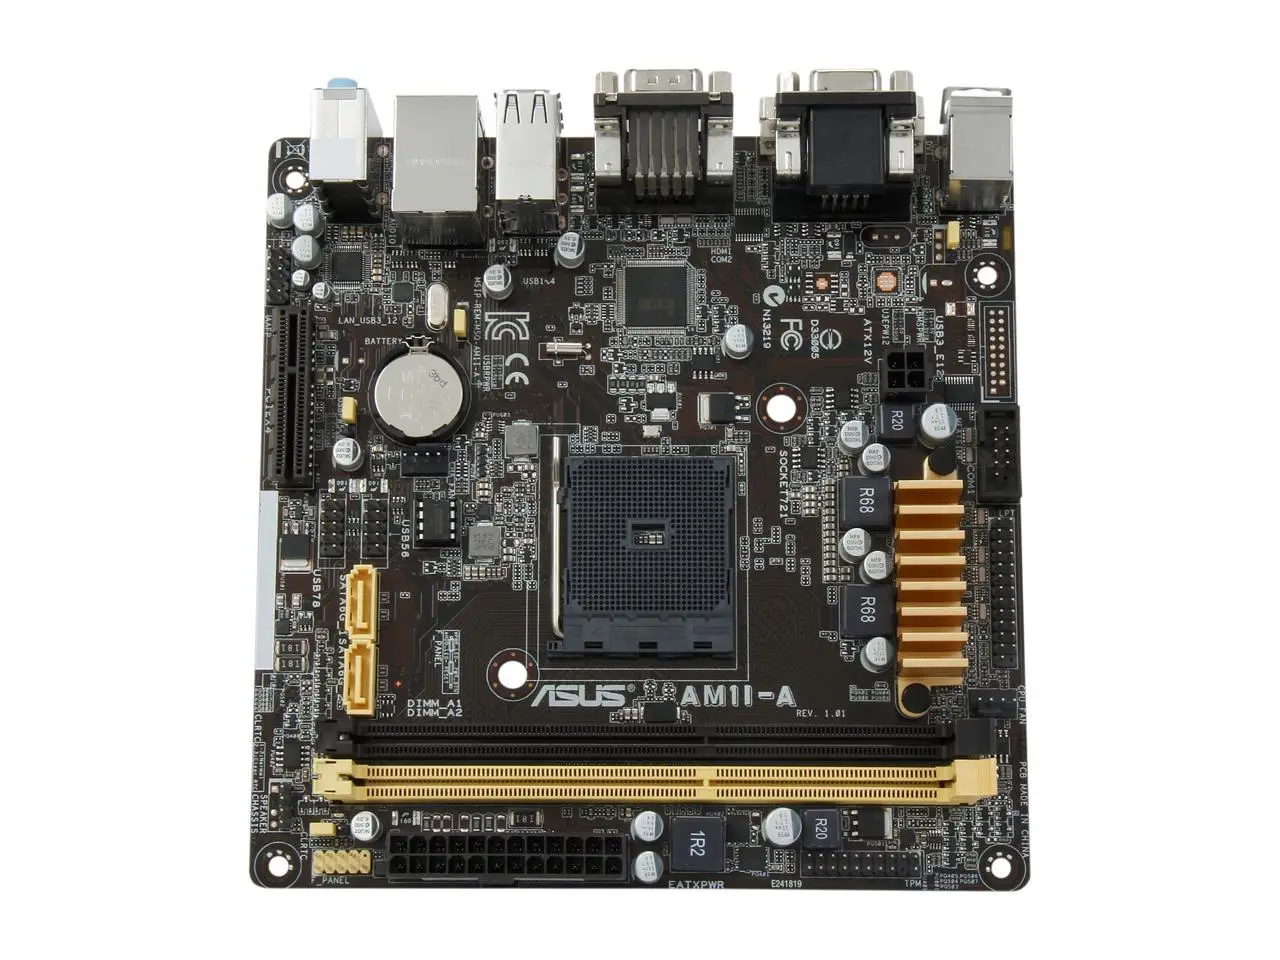 For ASUS AM1I-A For AM1 Mini ITX APU Desktop Motherboards 17*17 DDR3 32GB AMD HDM USB3.0 SATA3 PCIe 2.0 x4 mini pc motherboard